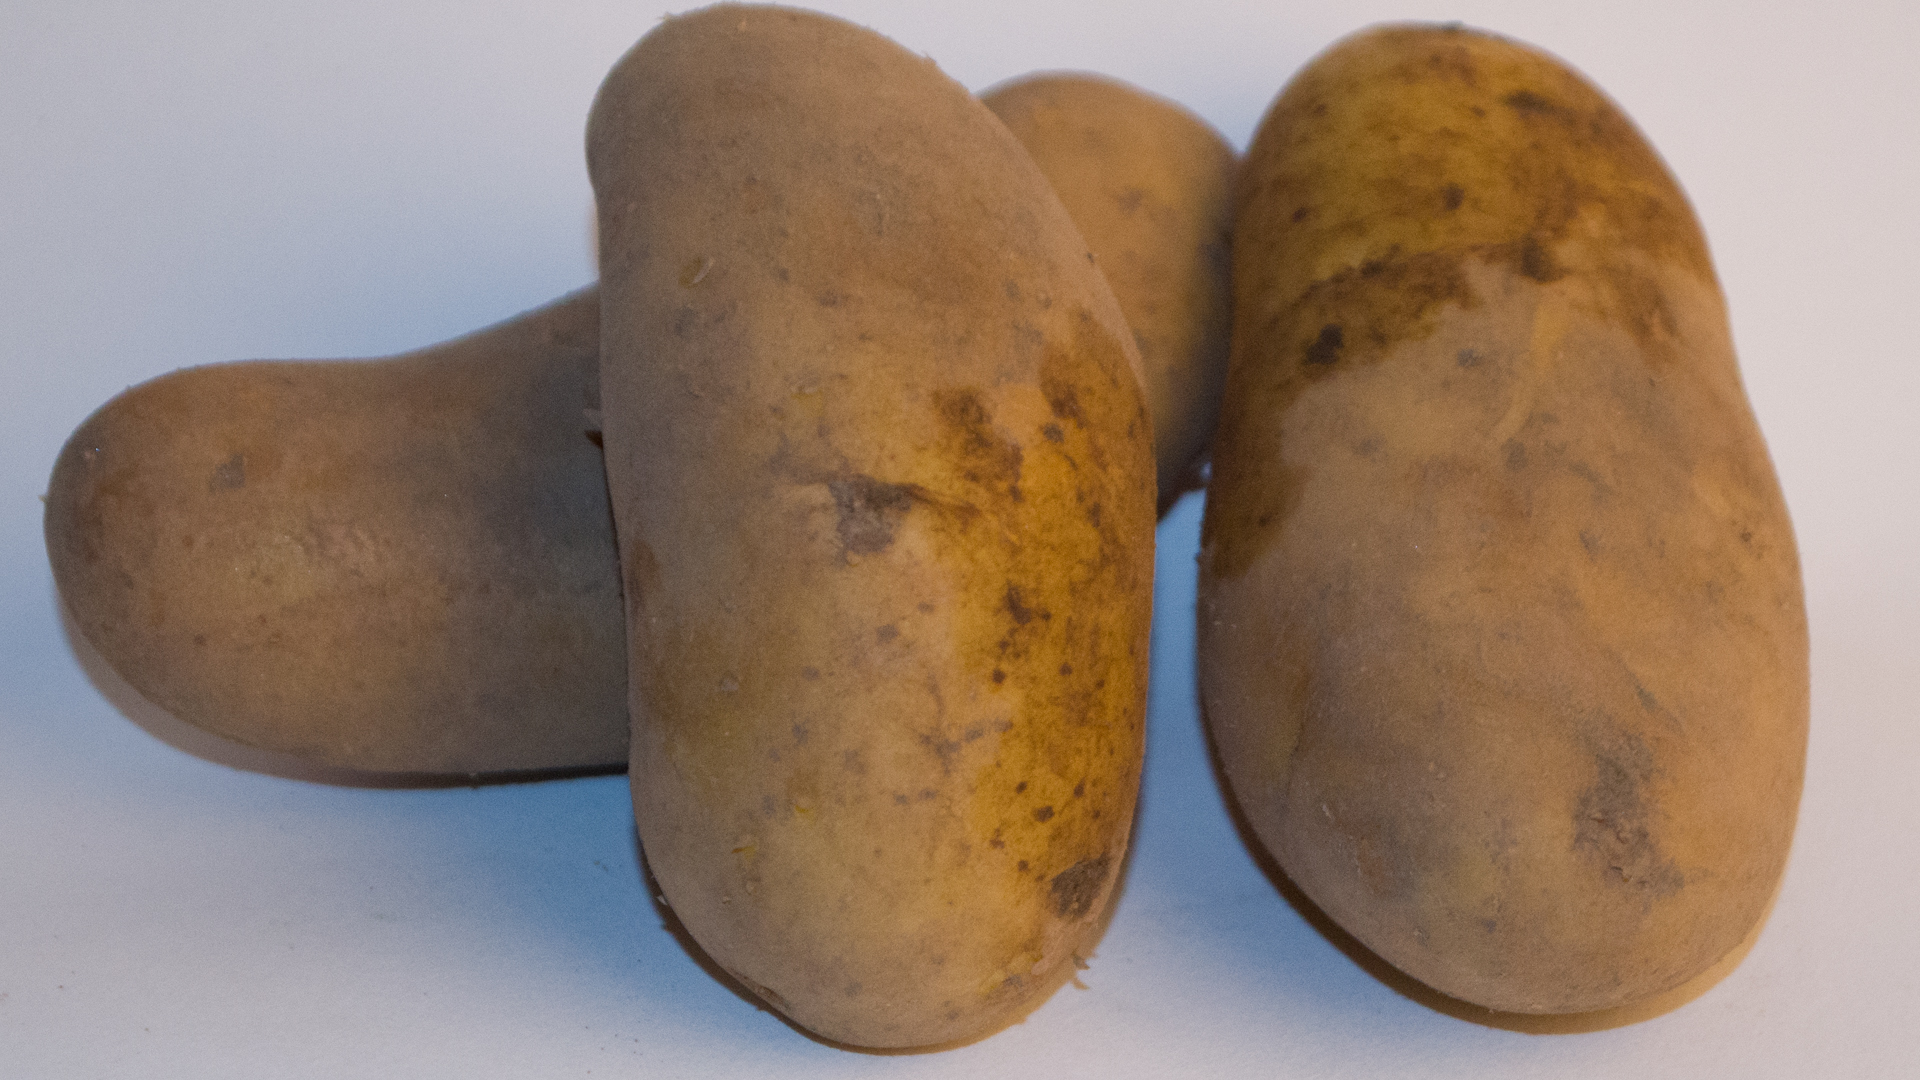 Kartoffel Cilena übergroß-Sack